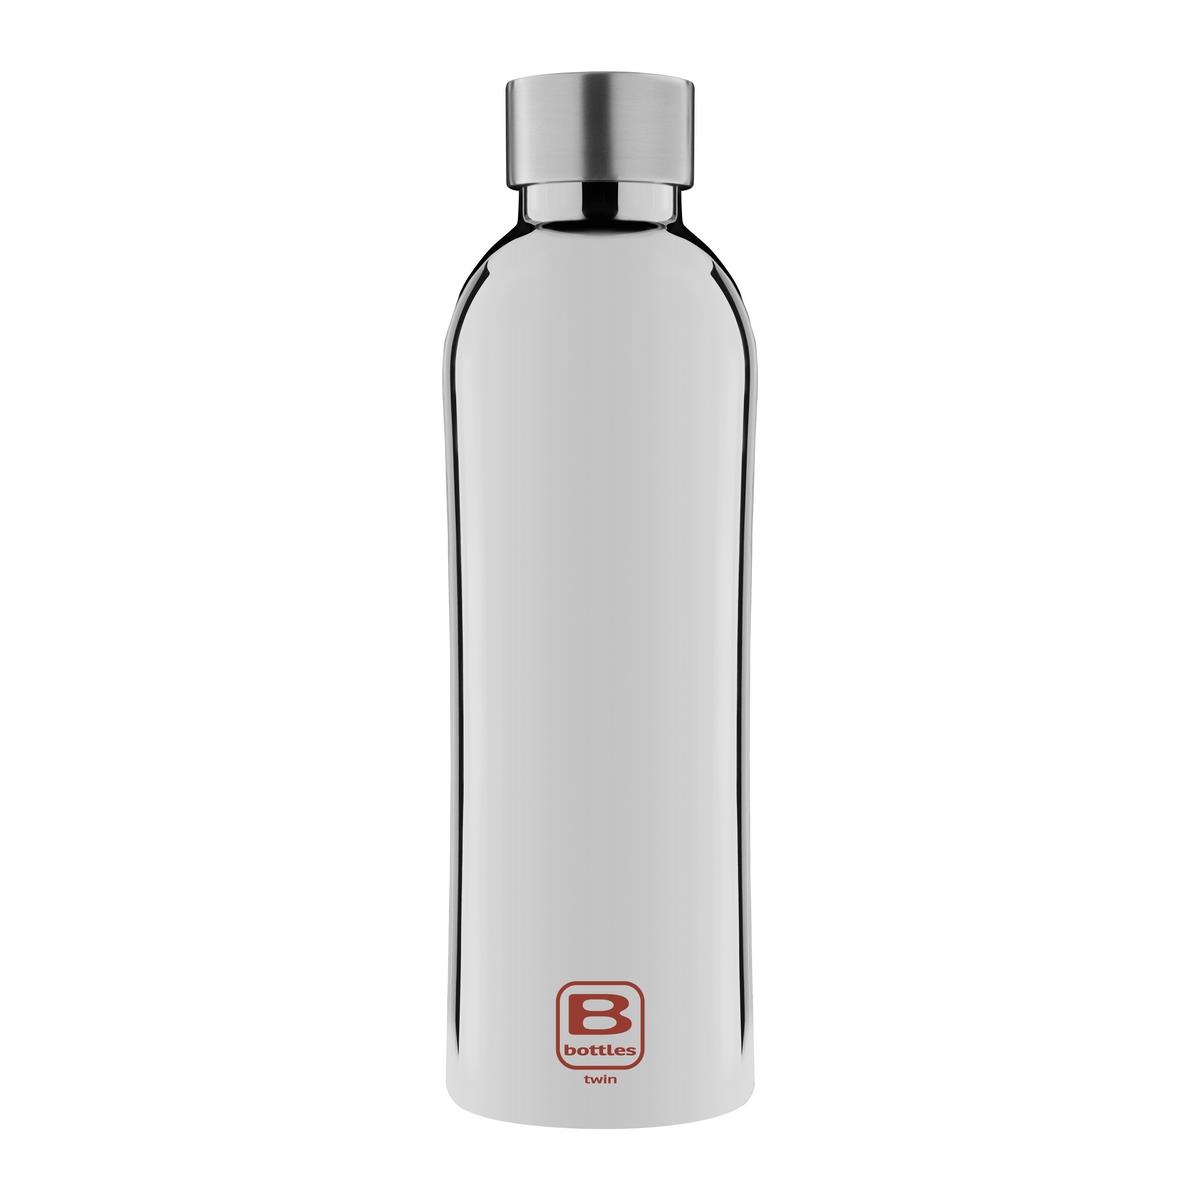 B Bottles Twin - Silver Lux - 800 ml - Garrafa térmica de parede dupla em aço inoxidável 18/10